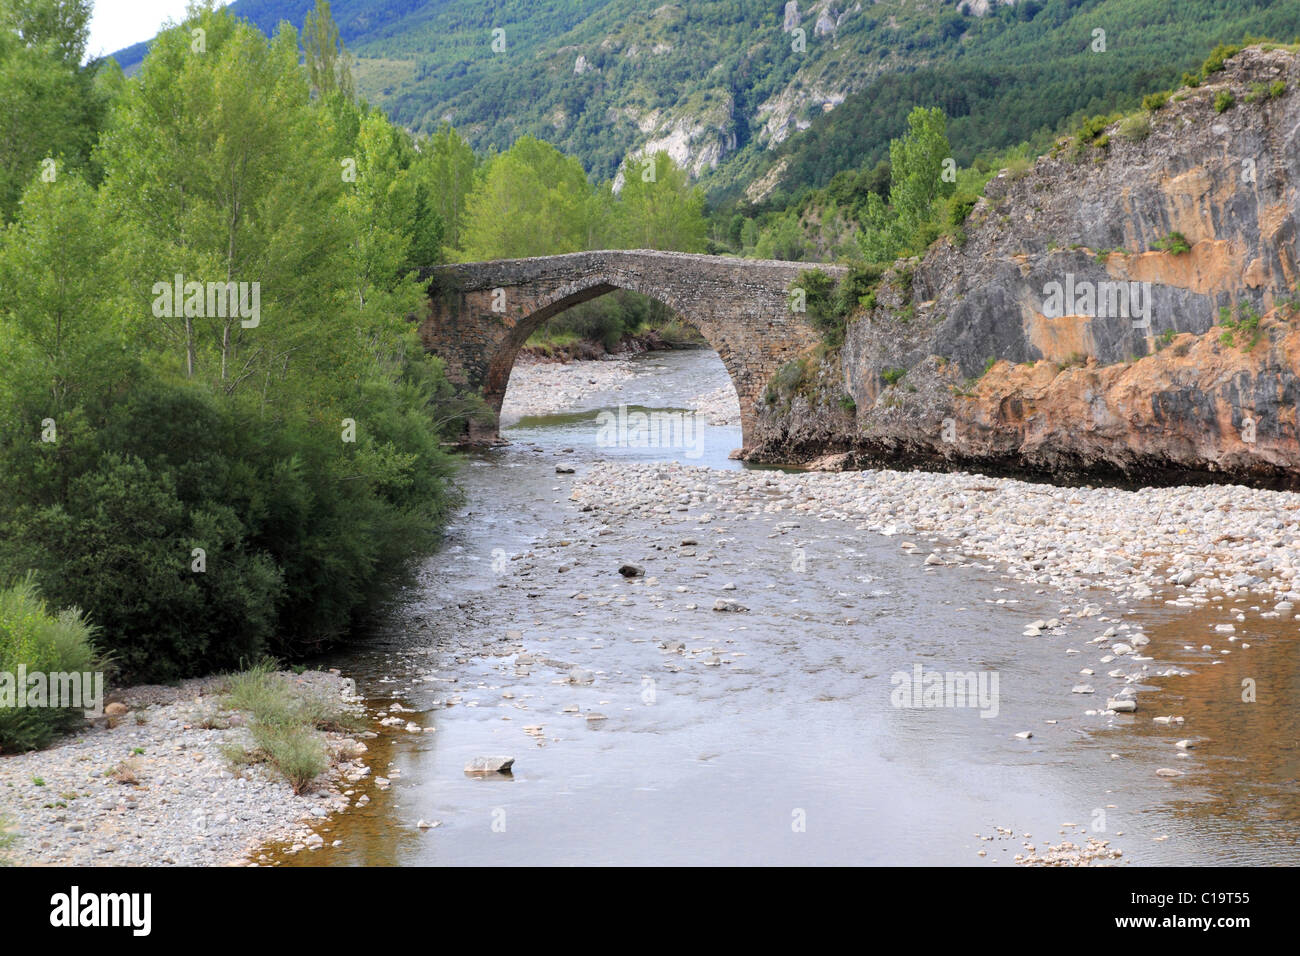 arch stone bridge in romanesque Hecho village Huesca Pyrenees Spain Stock Photo